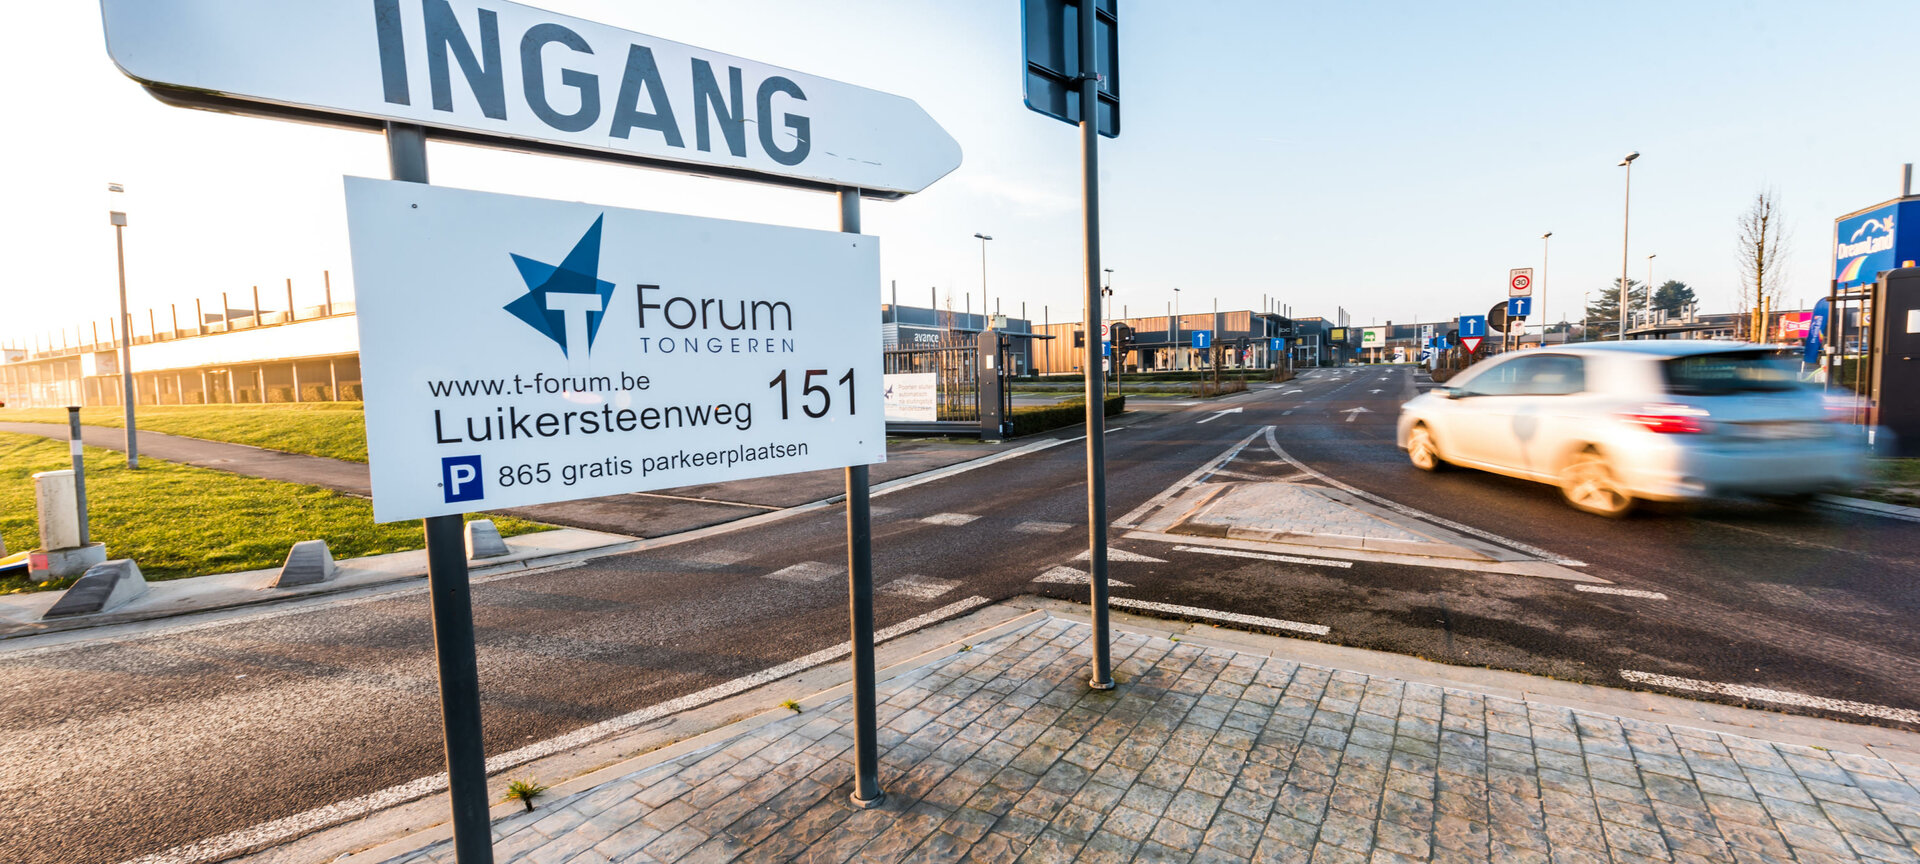 T-Forum: gezellig shoppen in Zuid-Limburg - Ruime, gratis parking